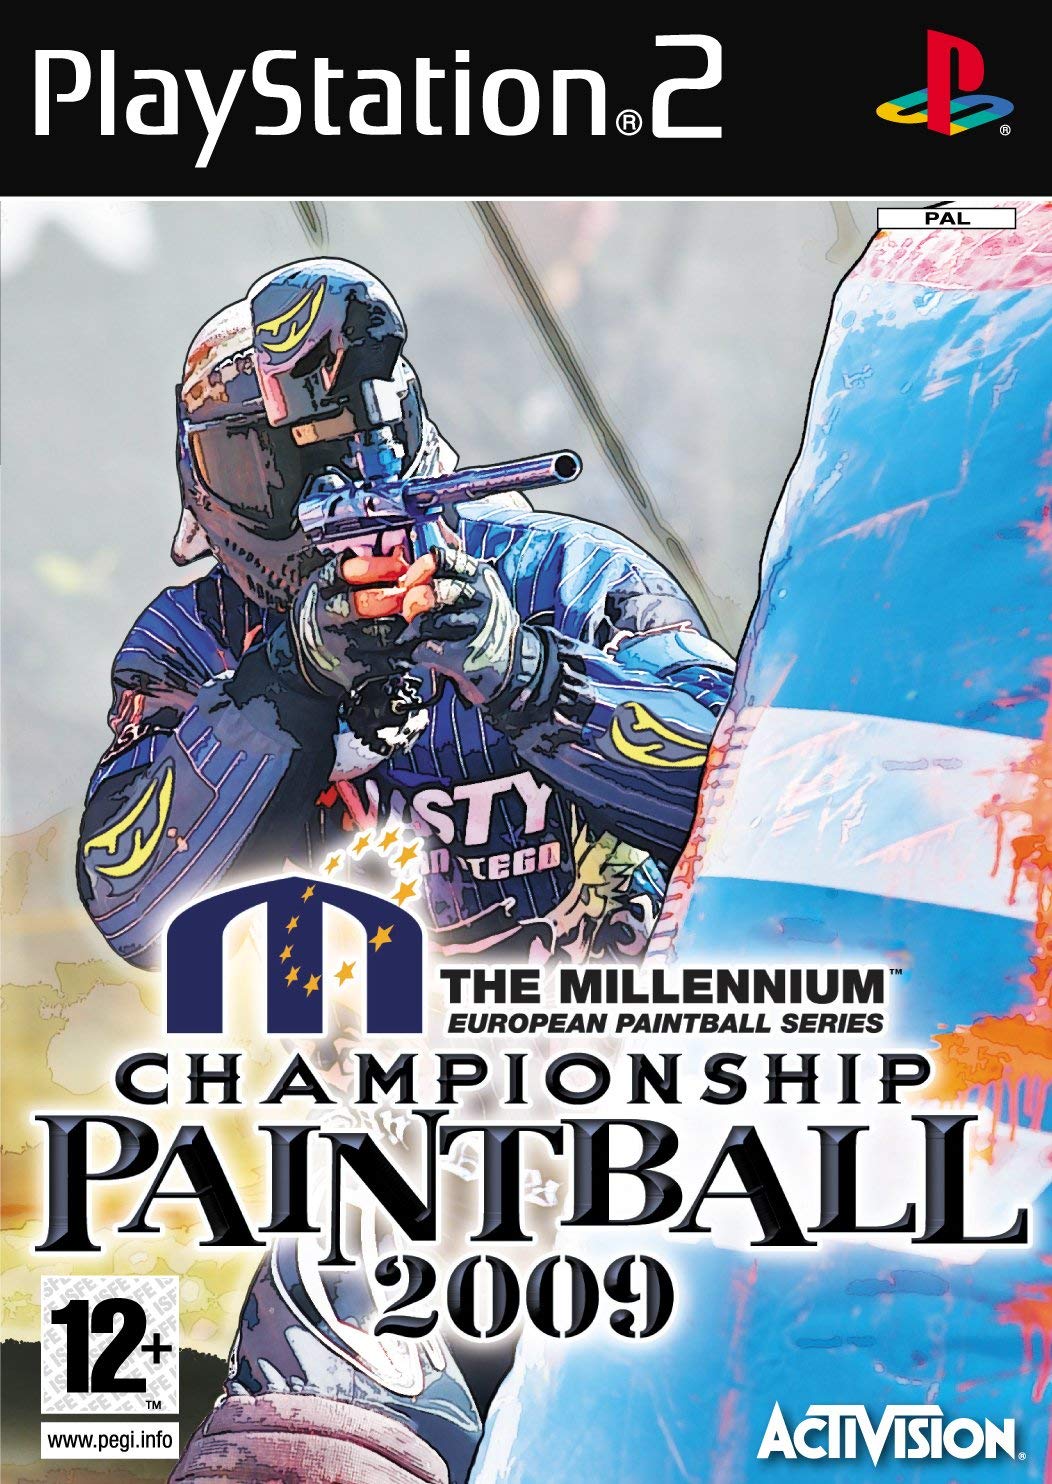 Millenium European Paintball Series Championship Paintball 2009 - PlayStation 2 Játékok